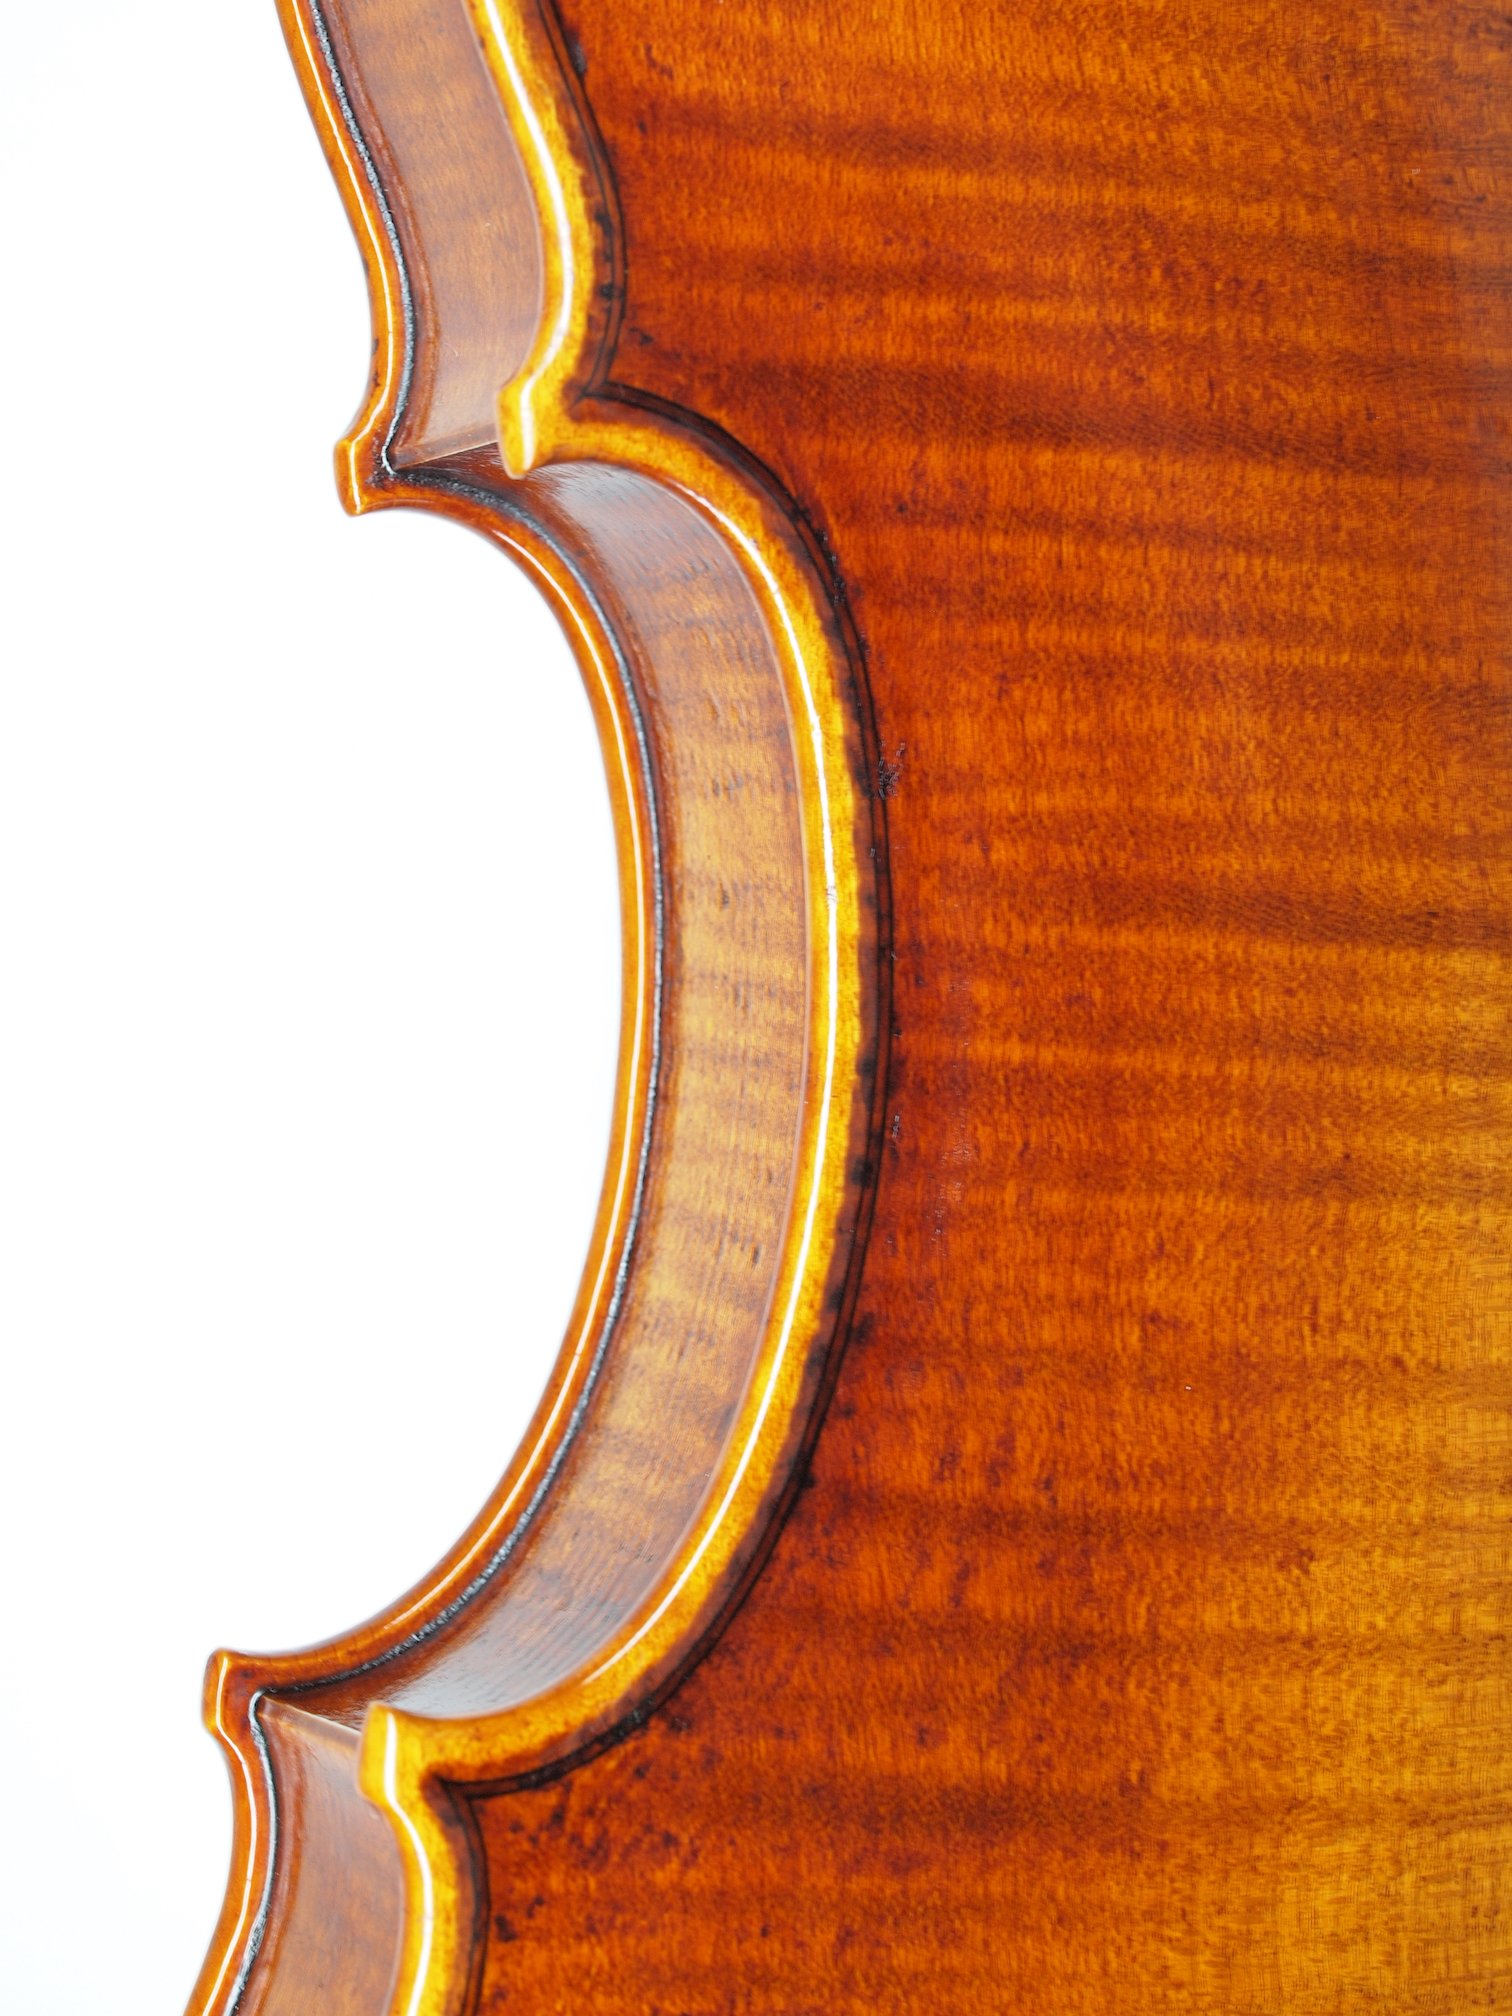 Violin based on the model of the "Sauret" Guarneri del Gesu anno 1743